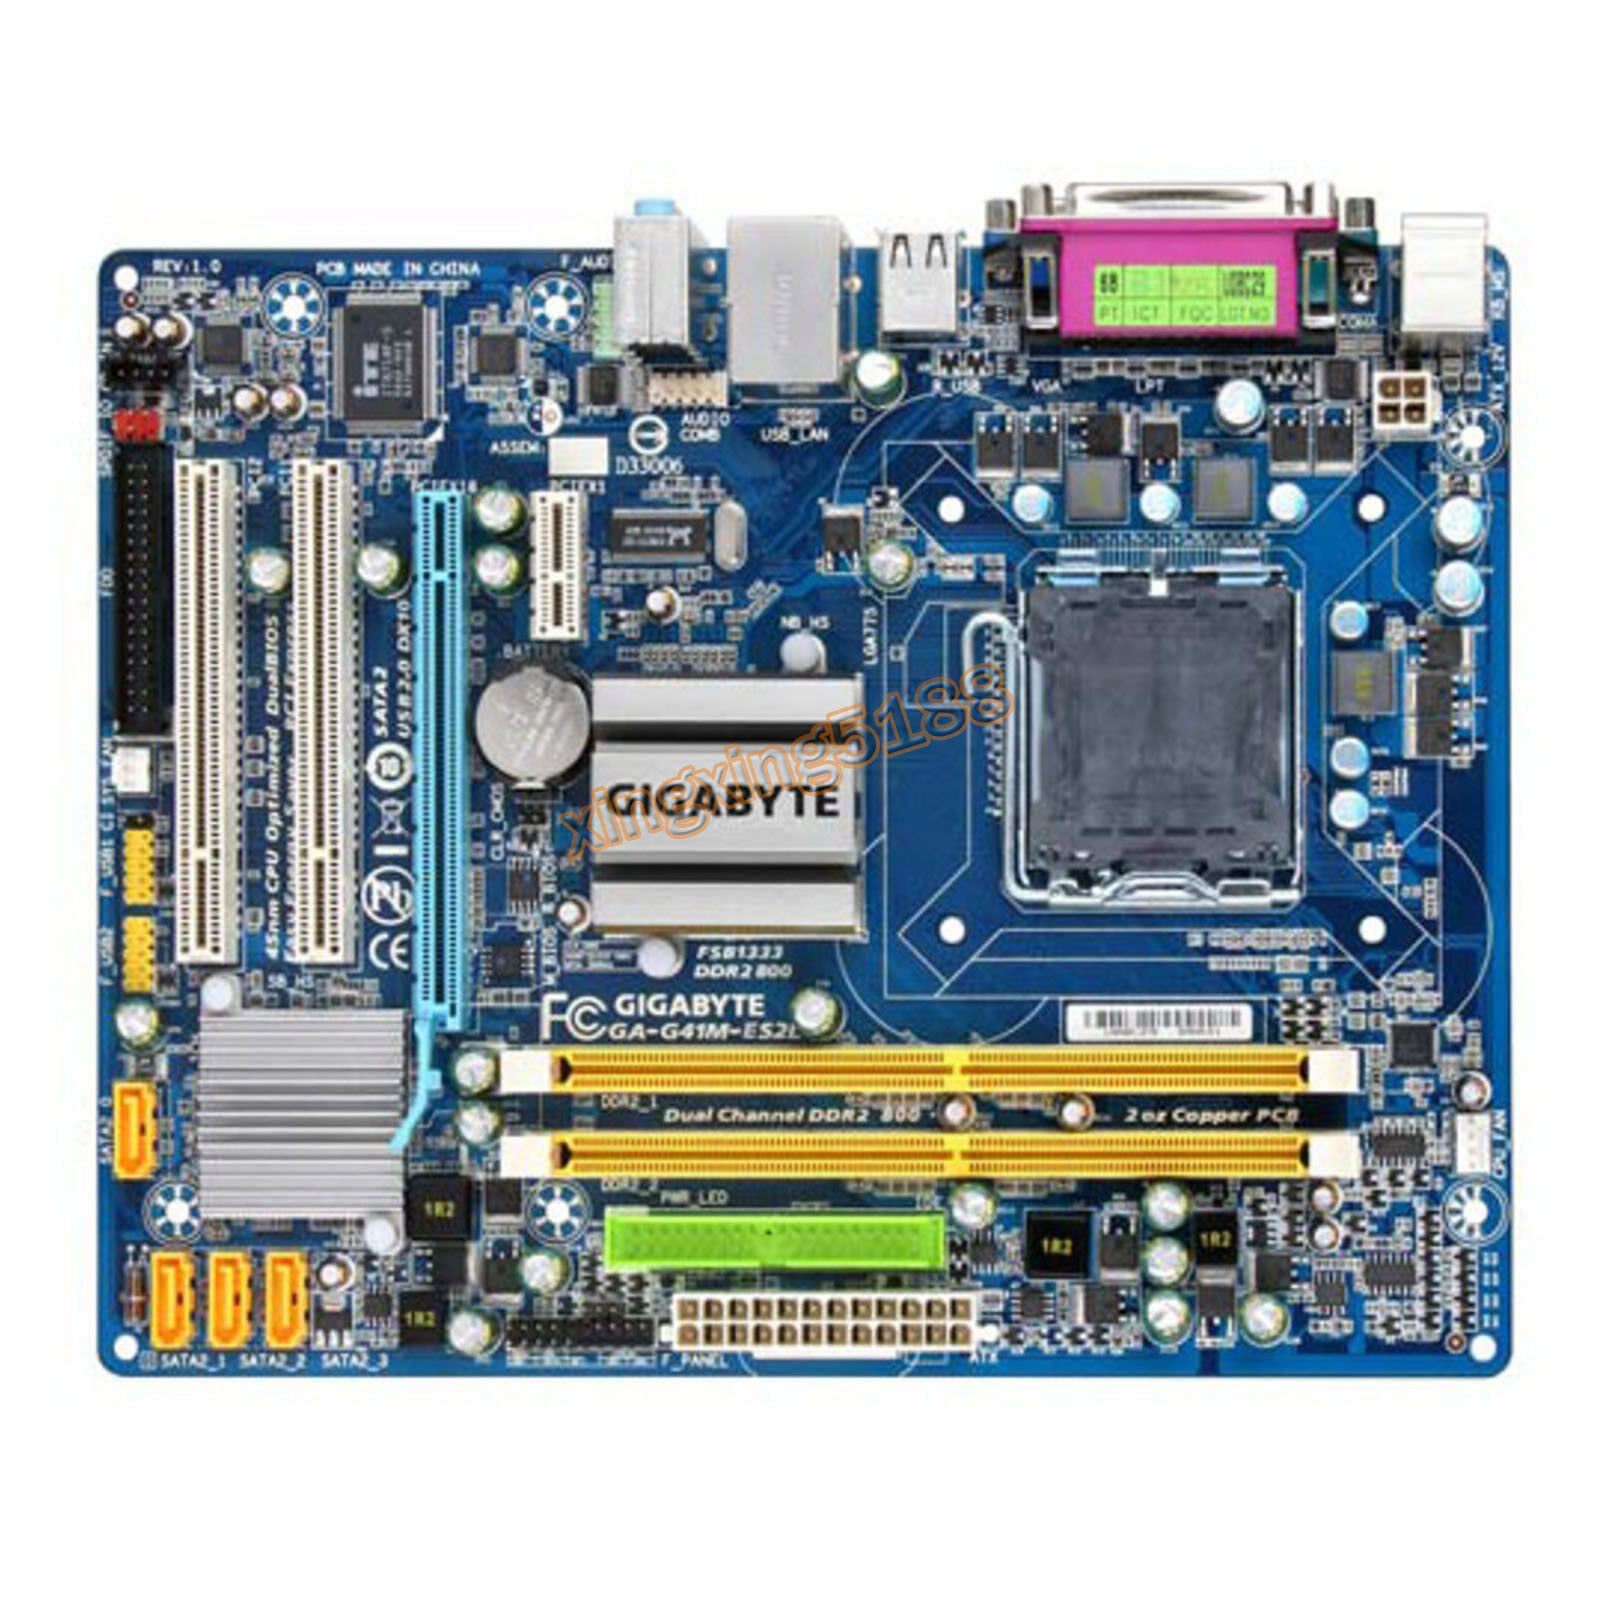 Gigabyte GA-G41M-ES2L LGA 775 Mainboard DDR2 8GB For Intel Micro ATX Motherboard